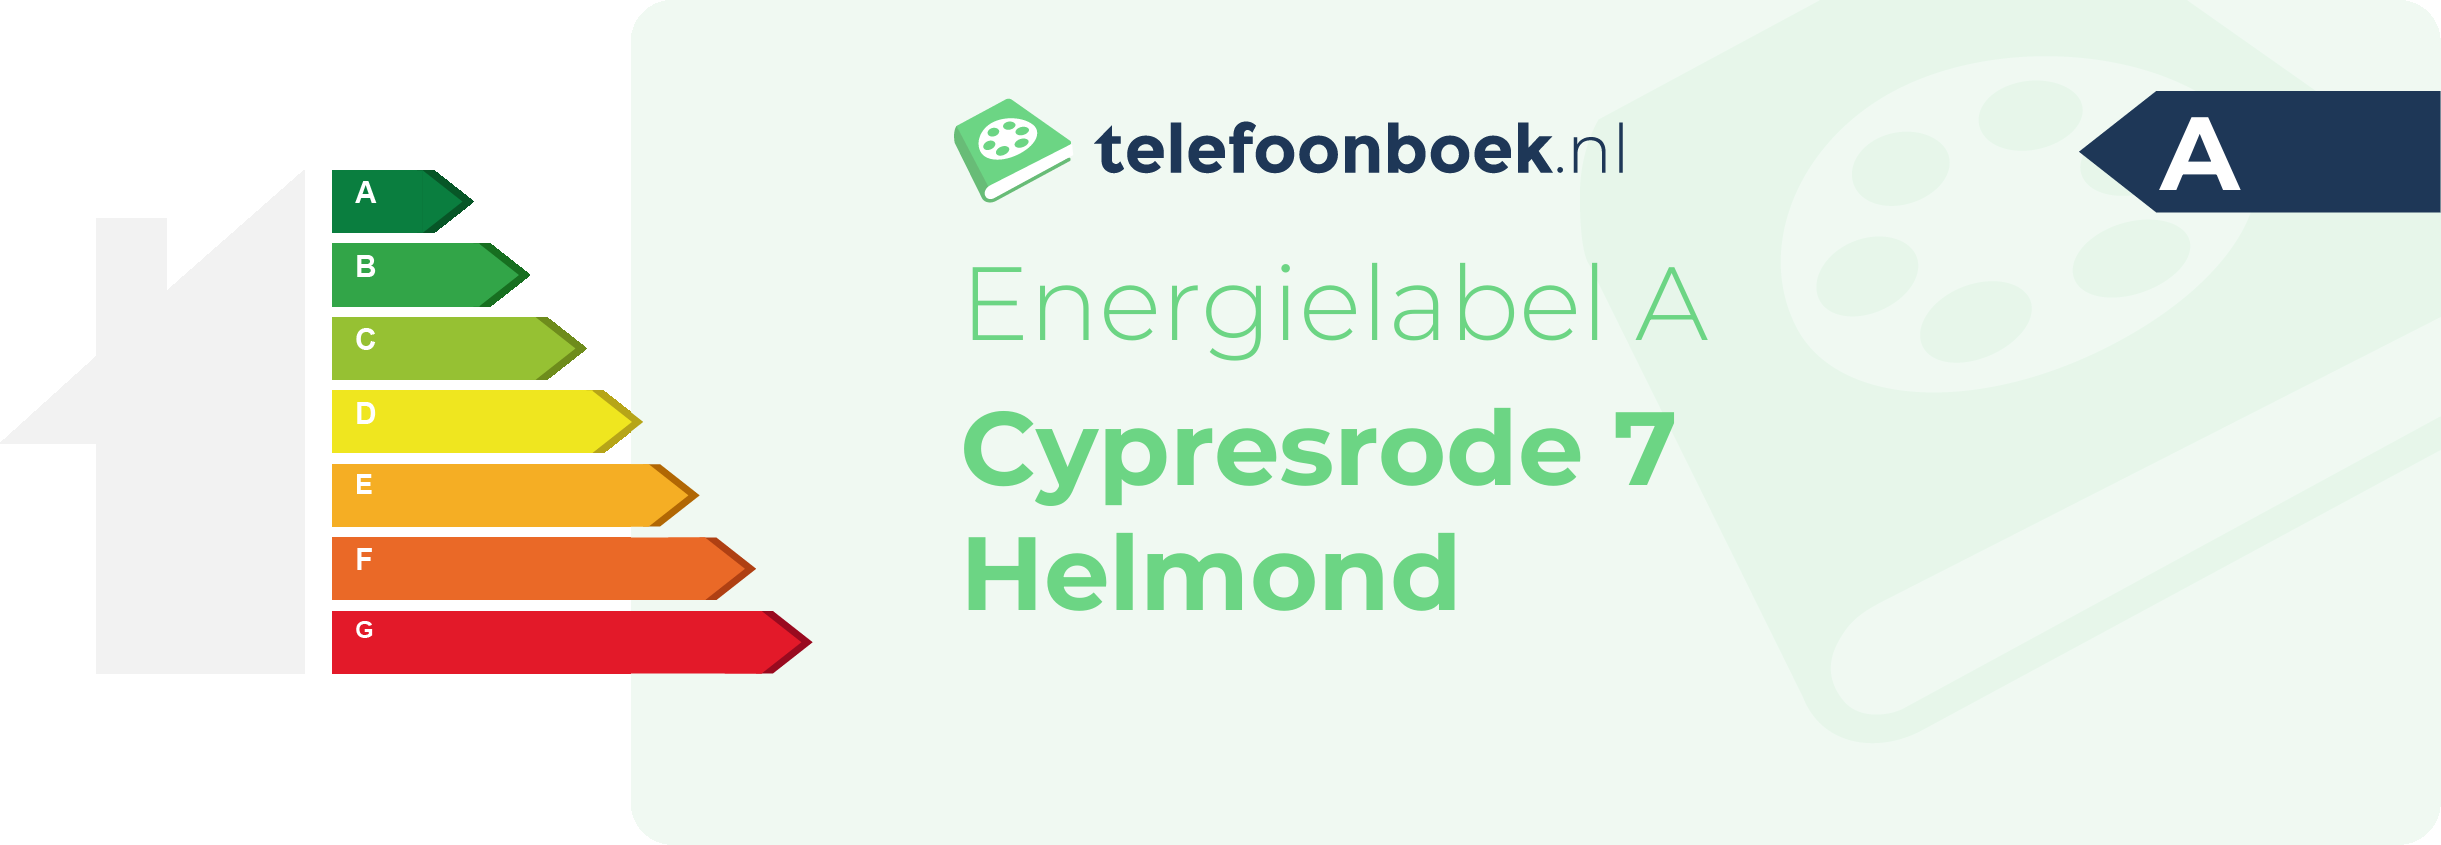 Energielabel Cypresrode 7 Helmond